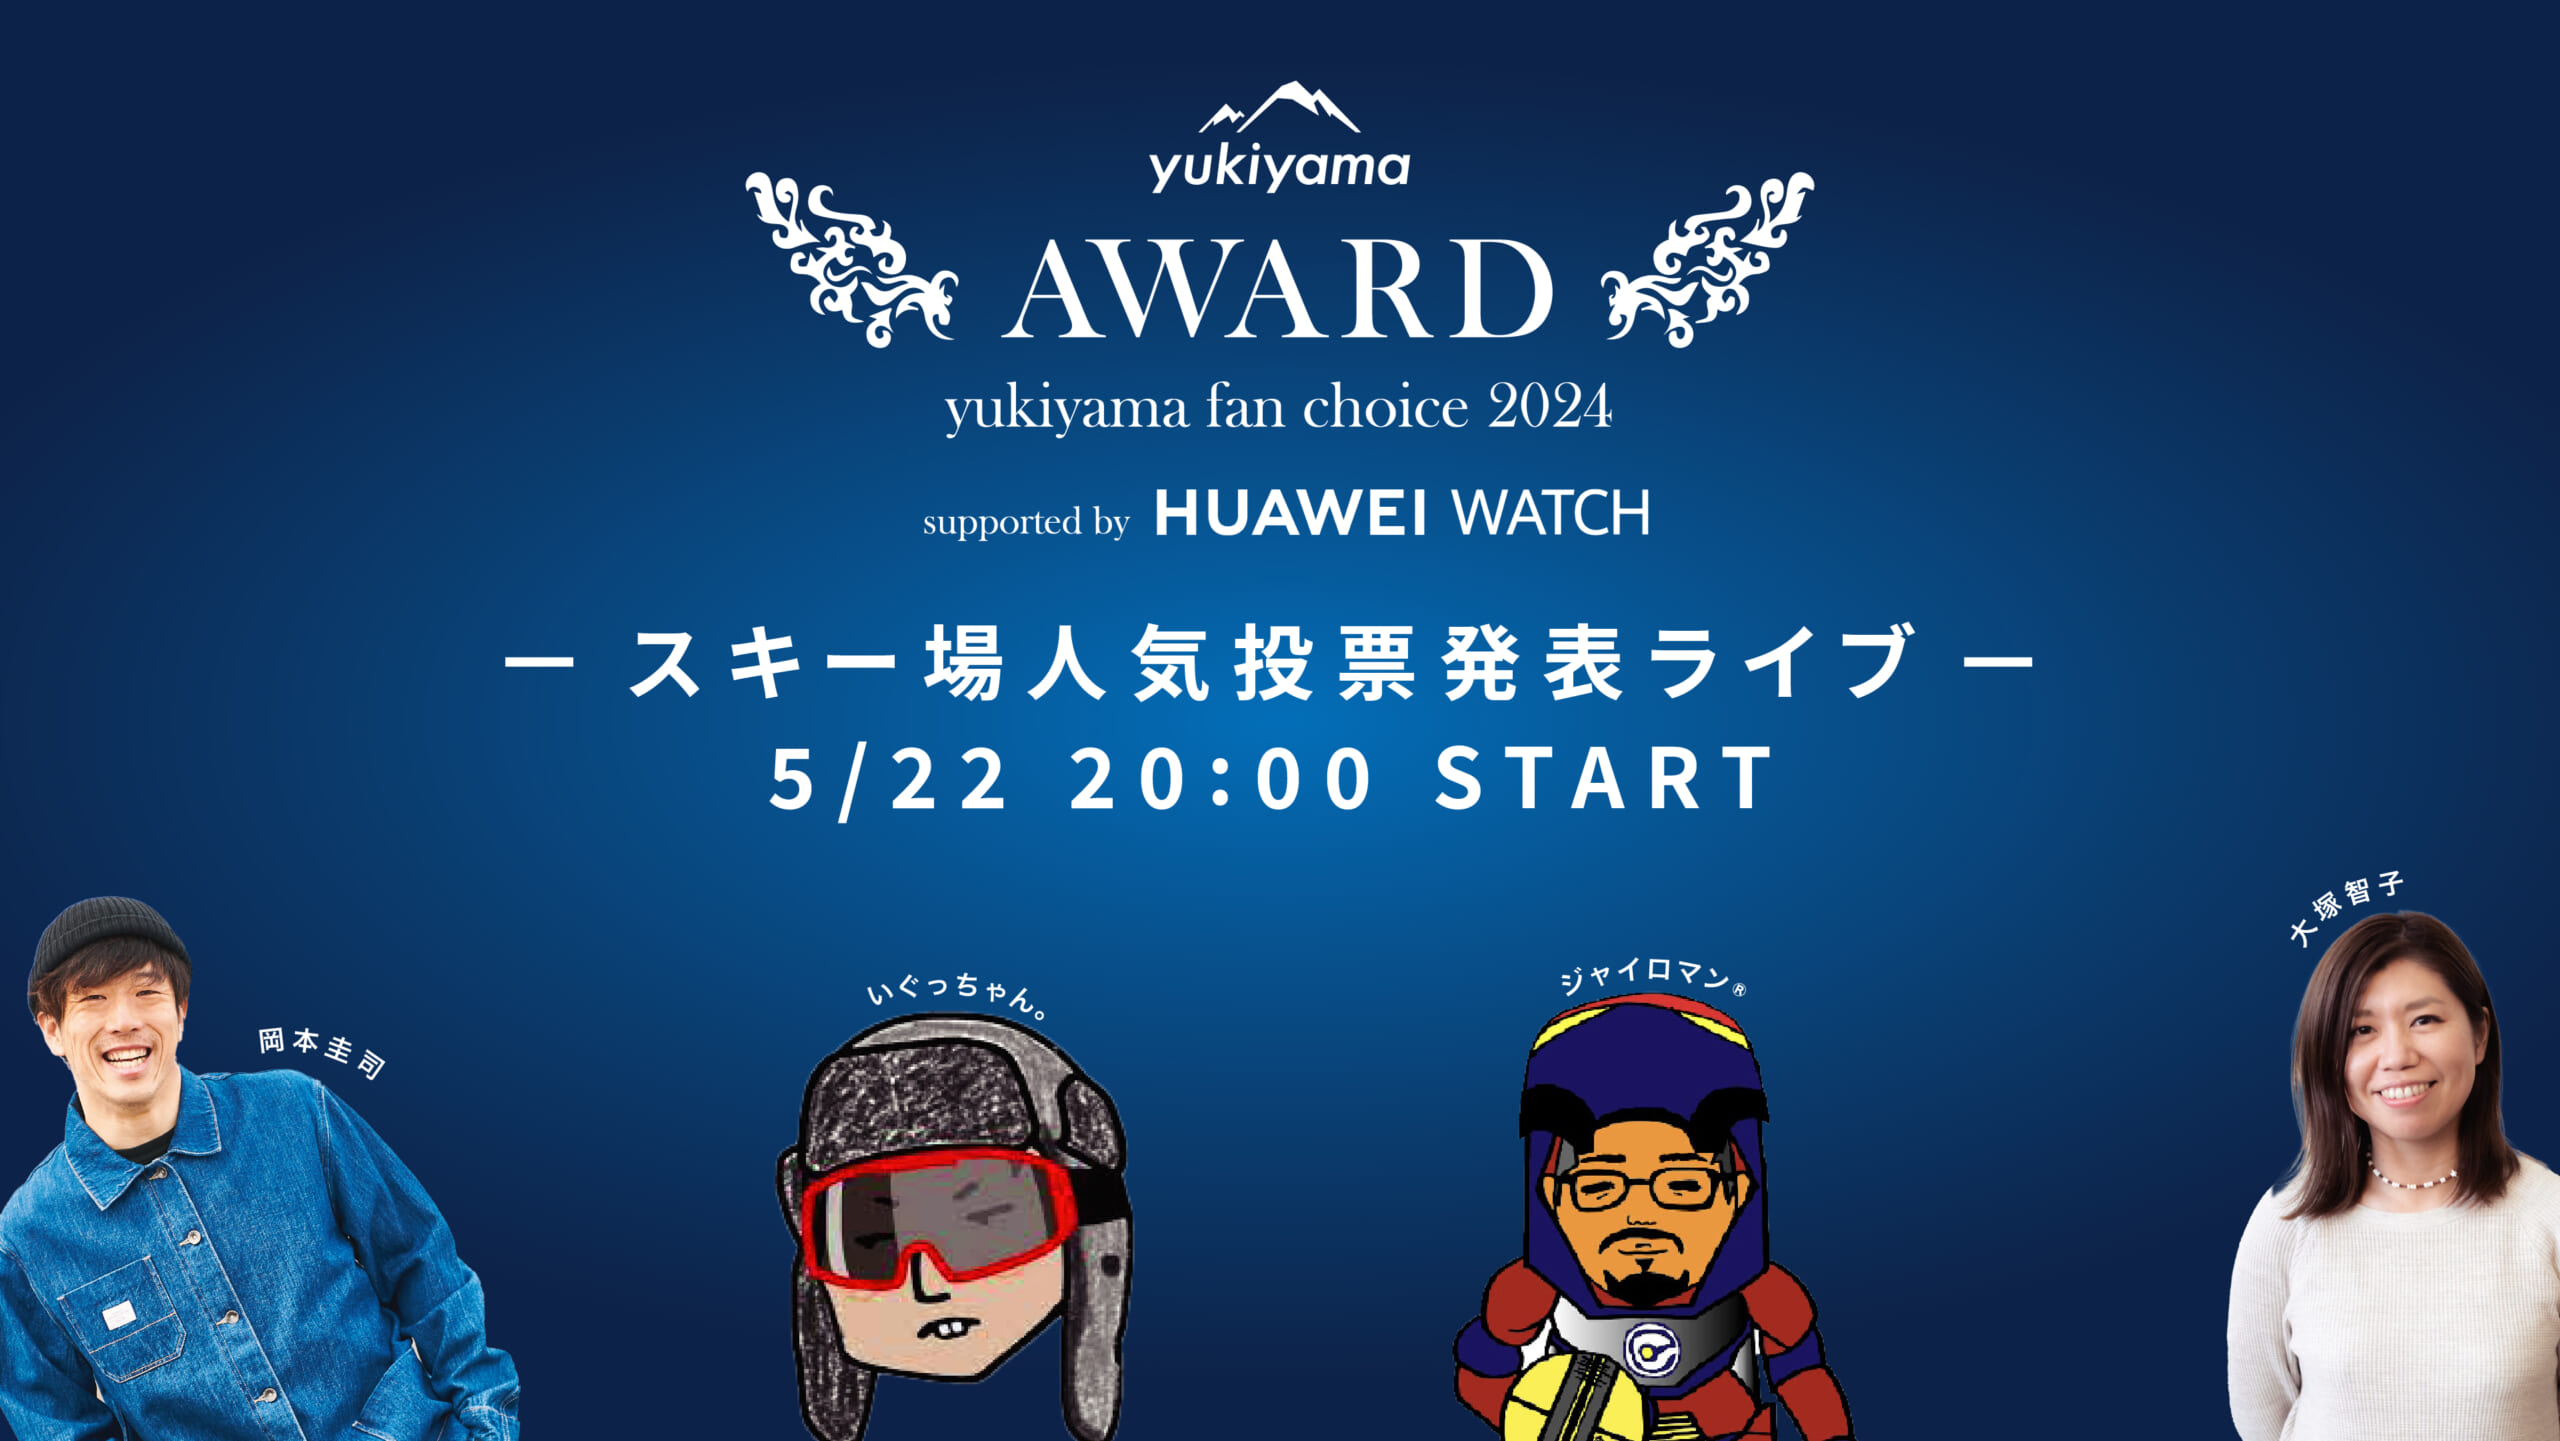 yukiyama FAN AWARD 2024 supported by HUAWEI WATCH 結果発表ライブ